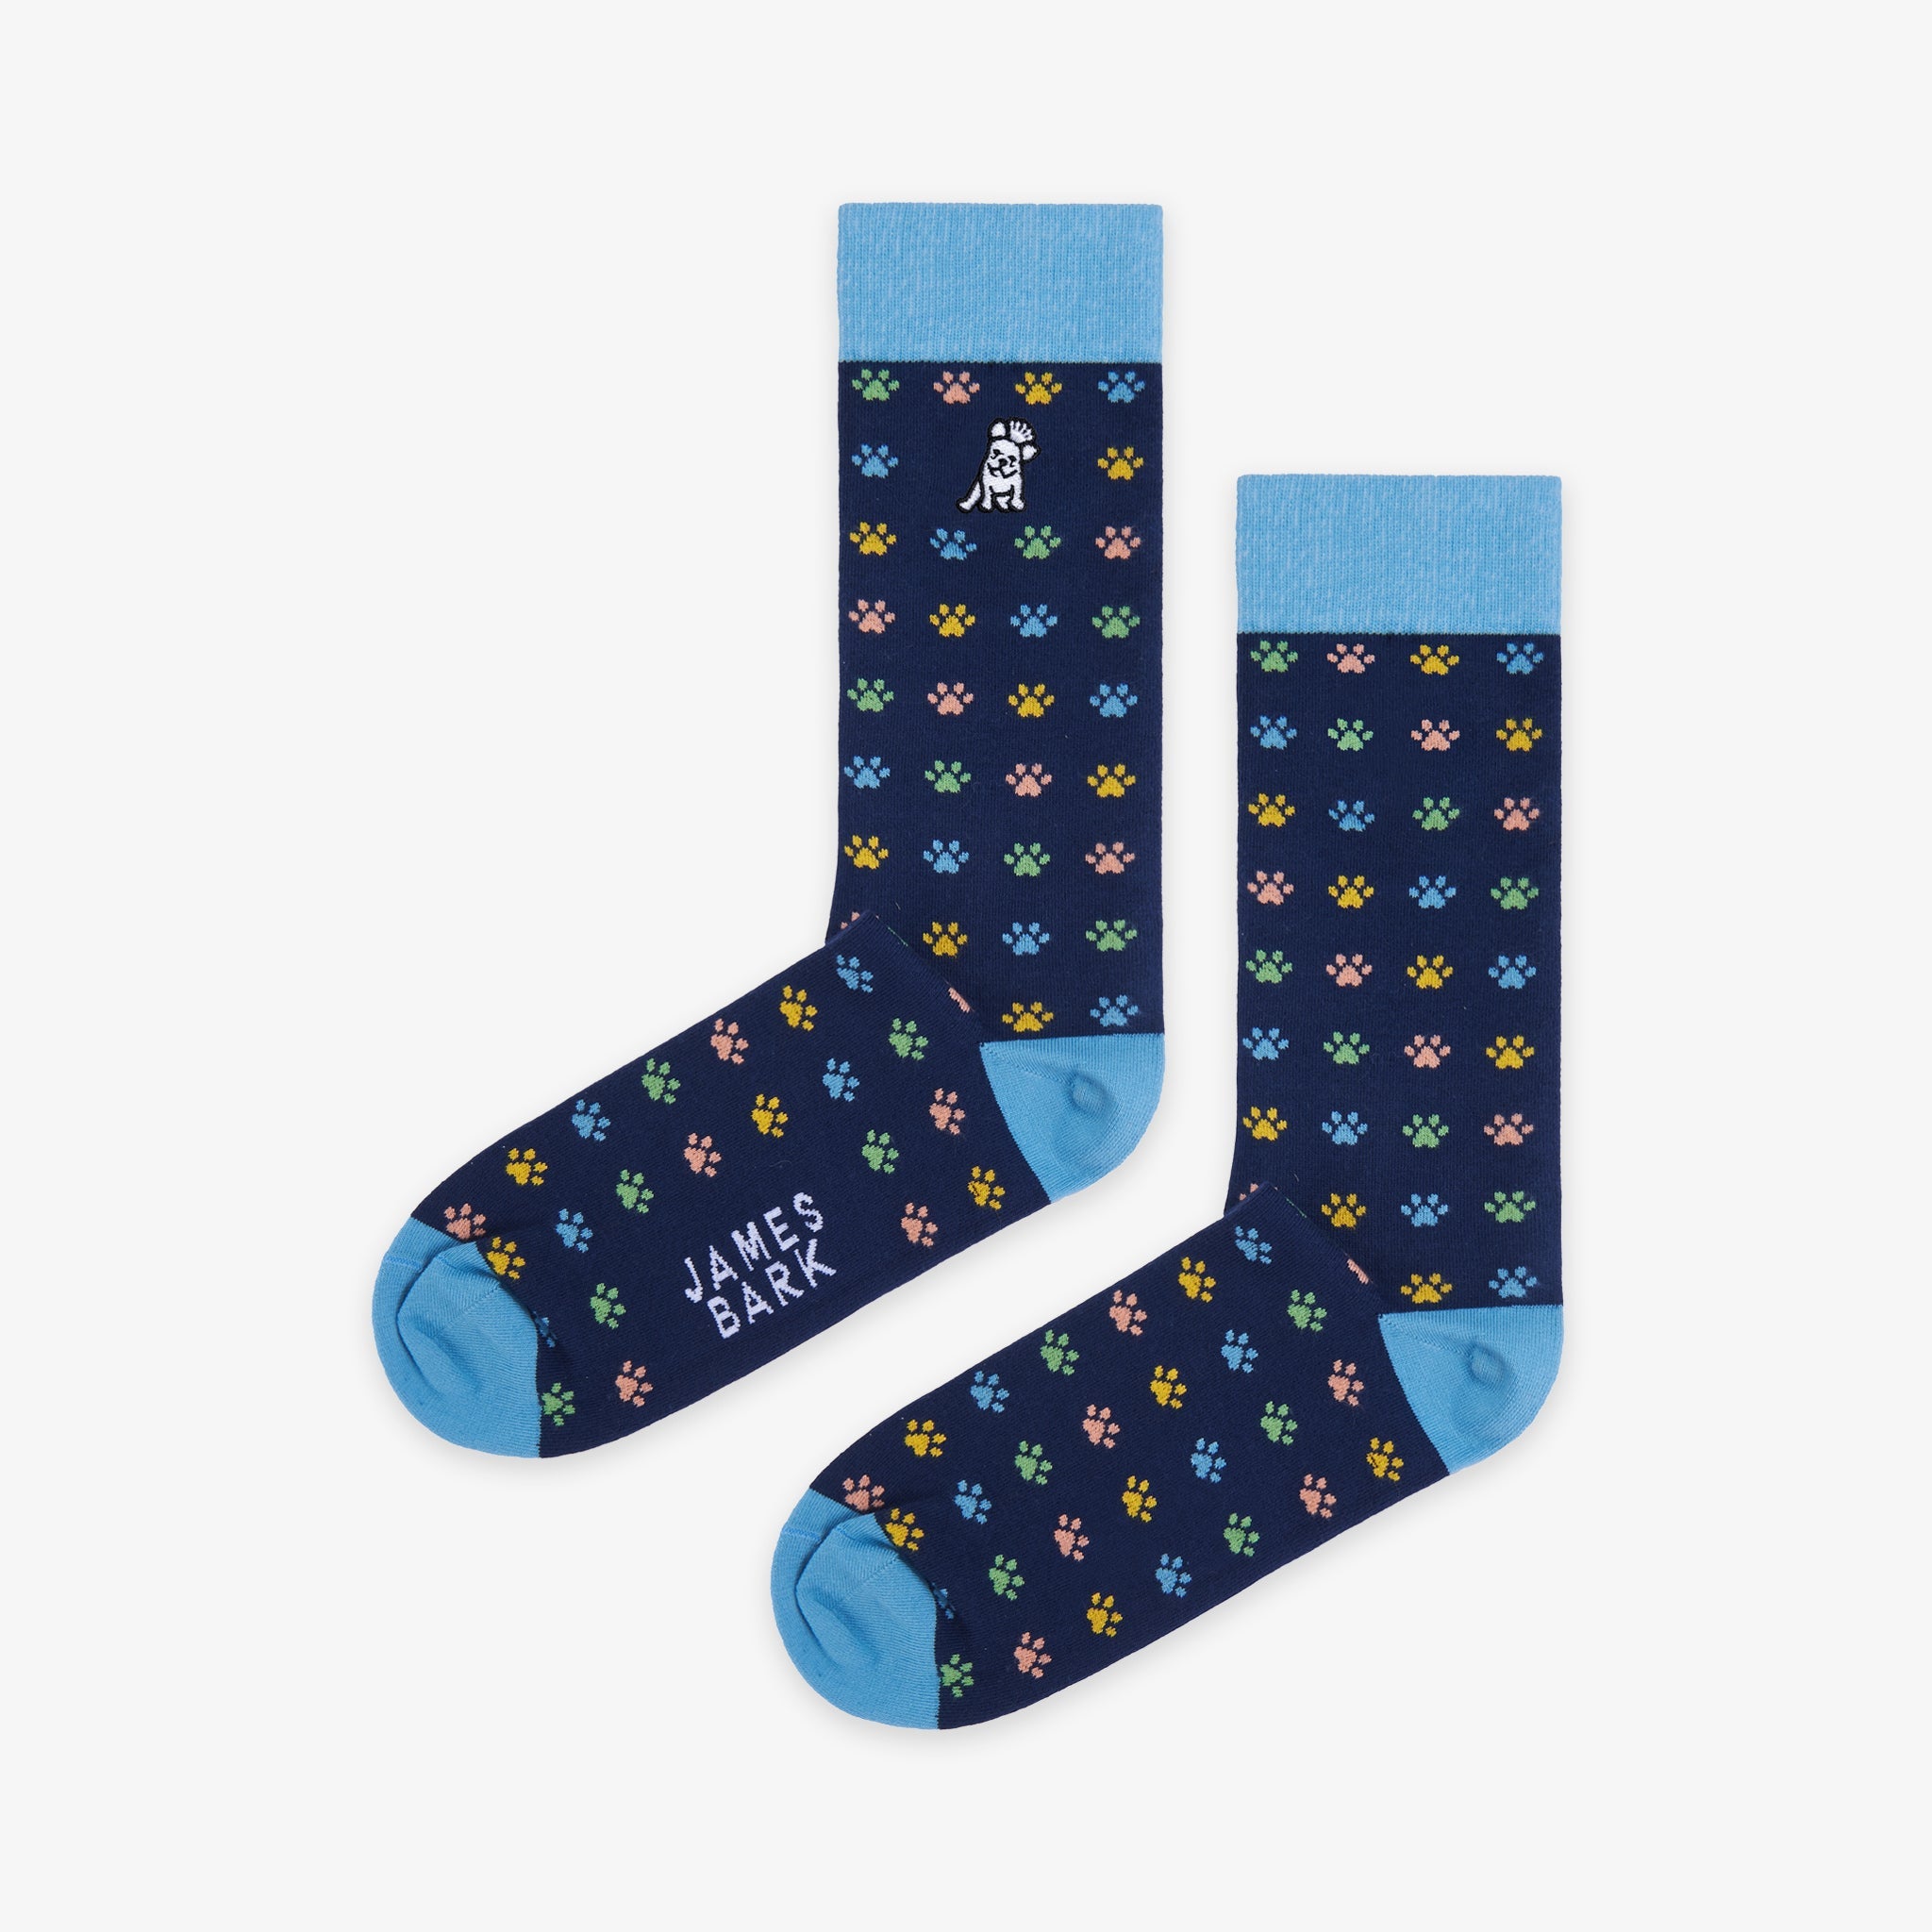 Paws Printed Socks in Blue - JAMES BARK